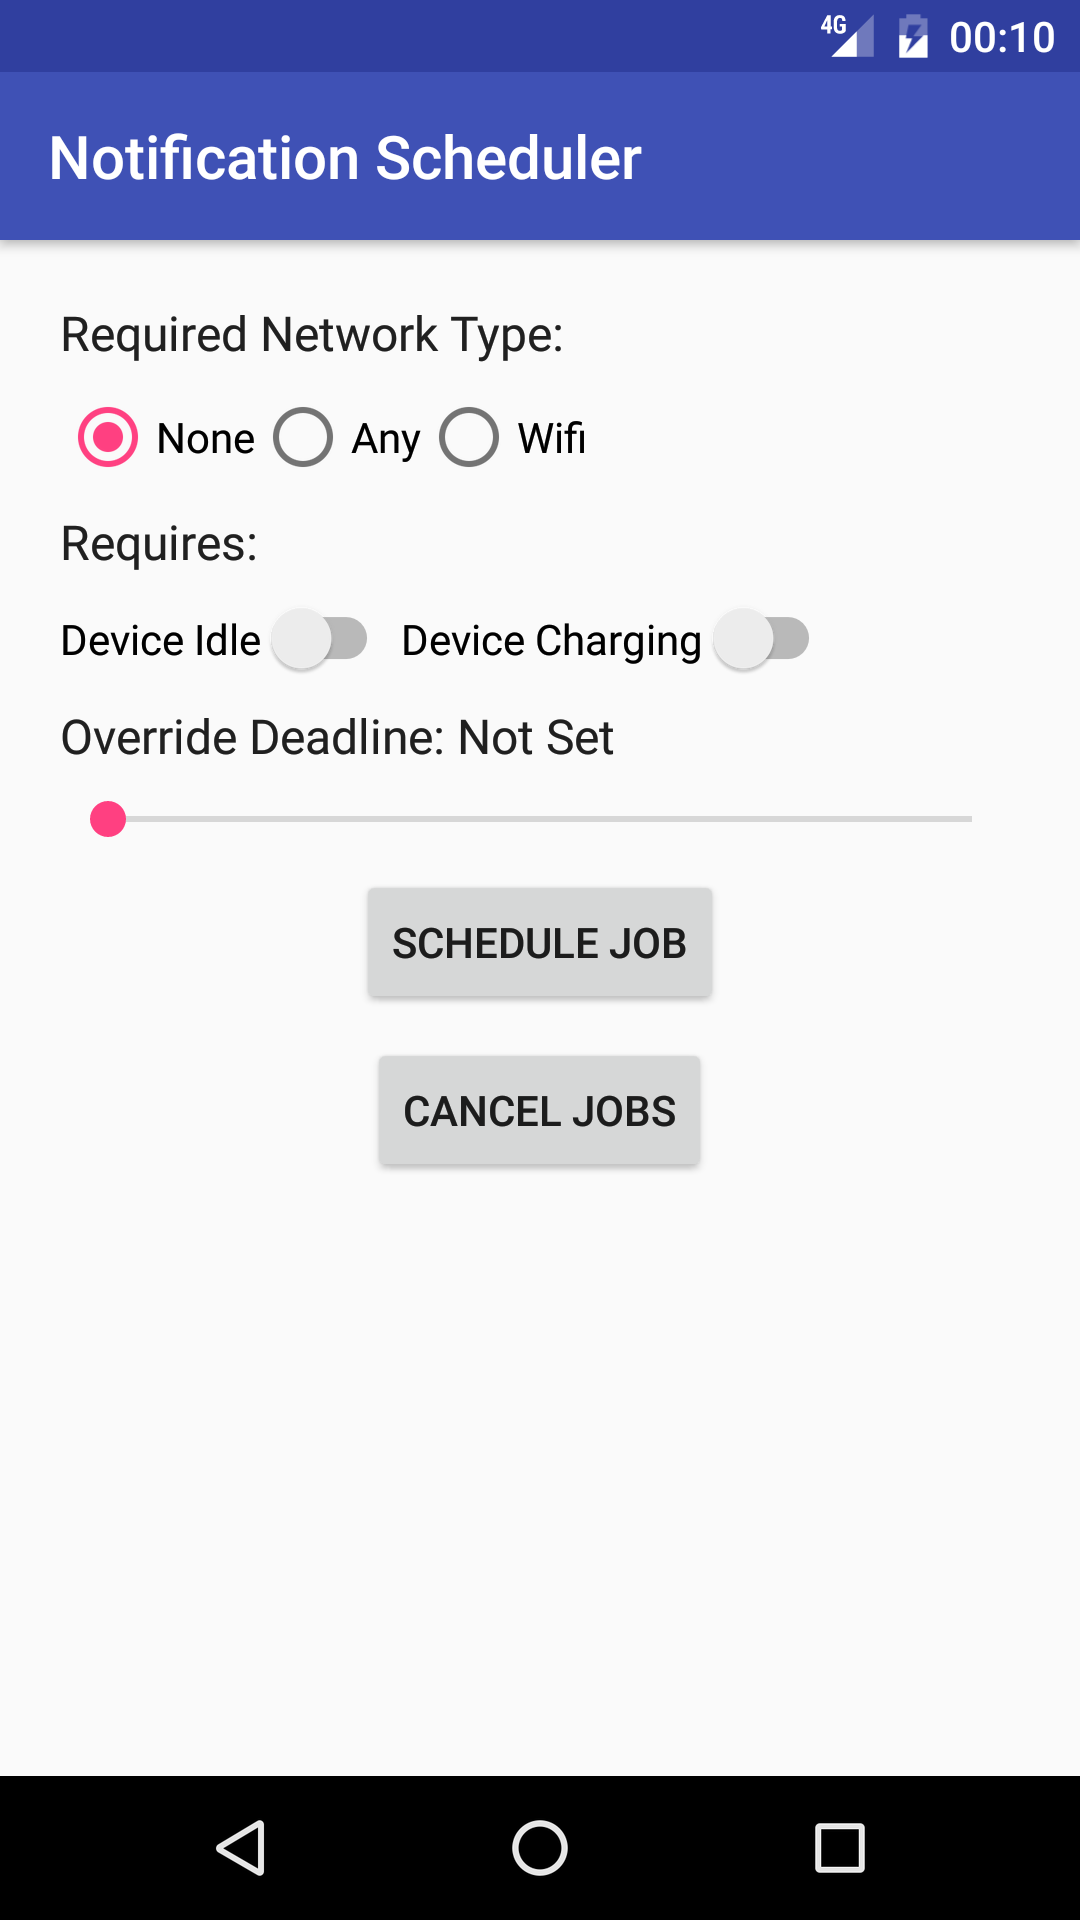 UI Controls for the Override Deadline Condition